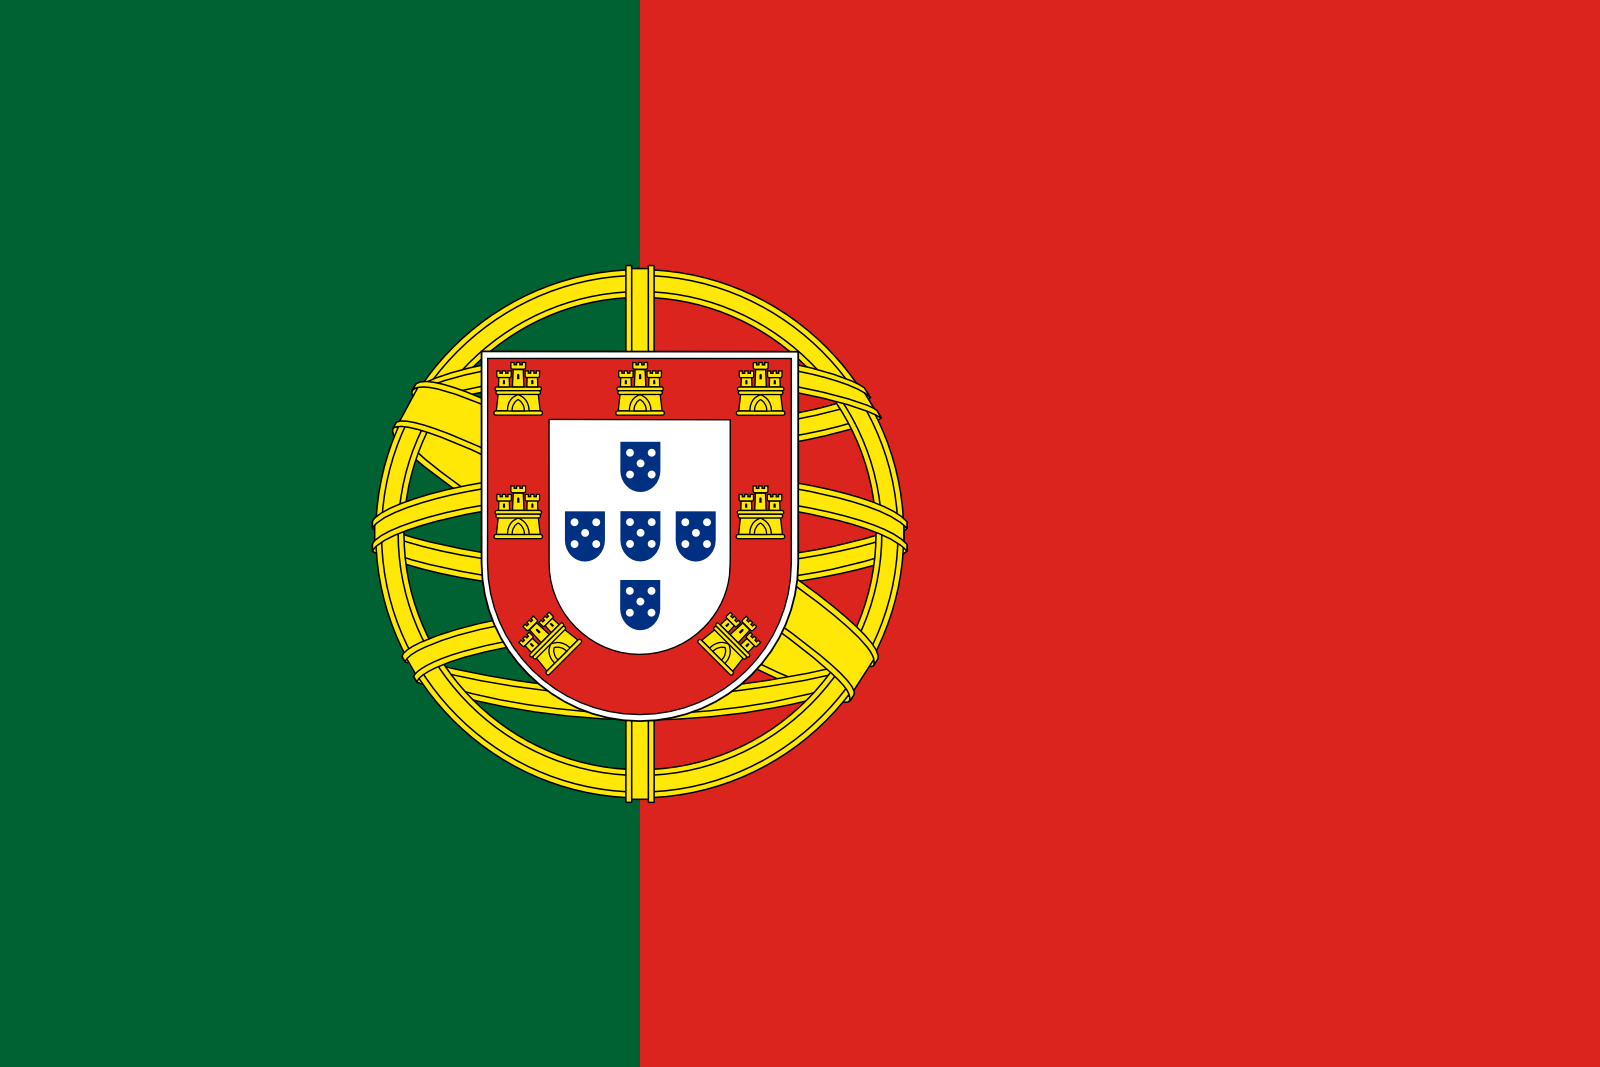 Portugal Filter